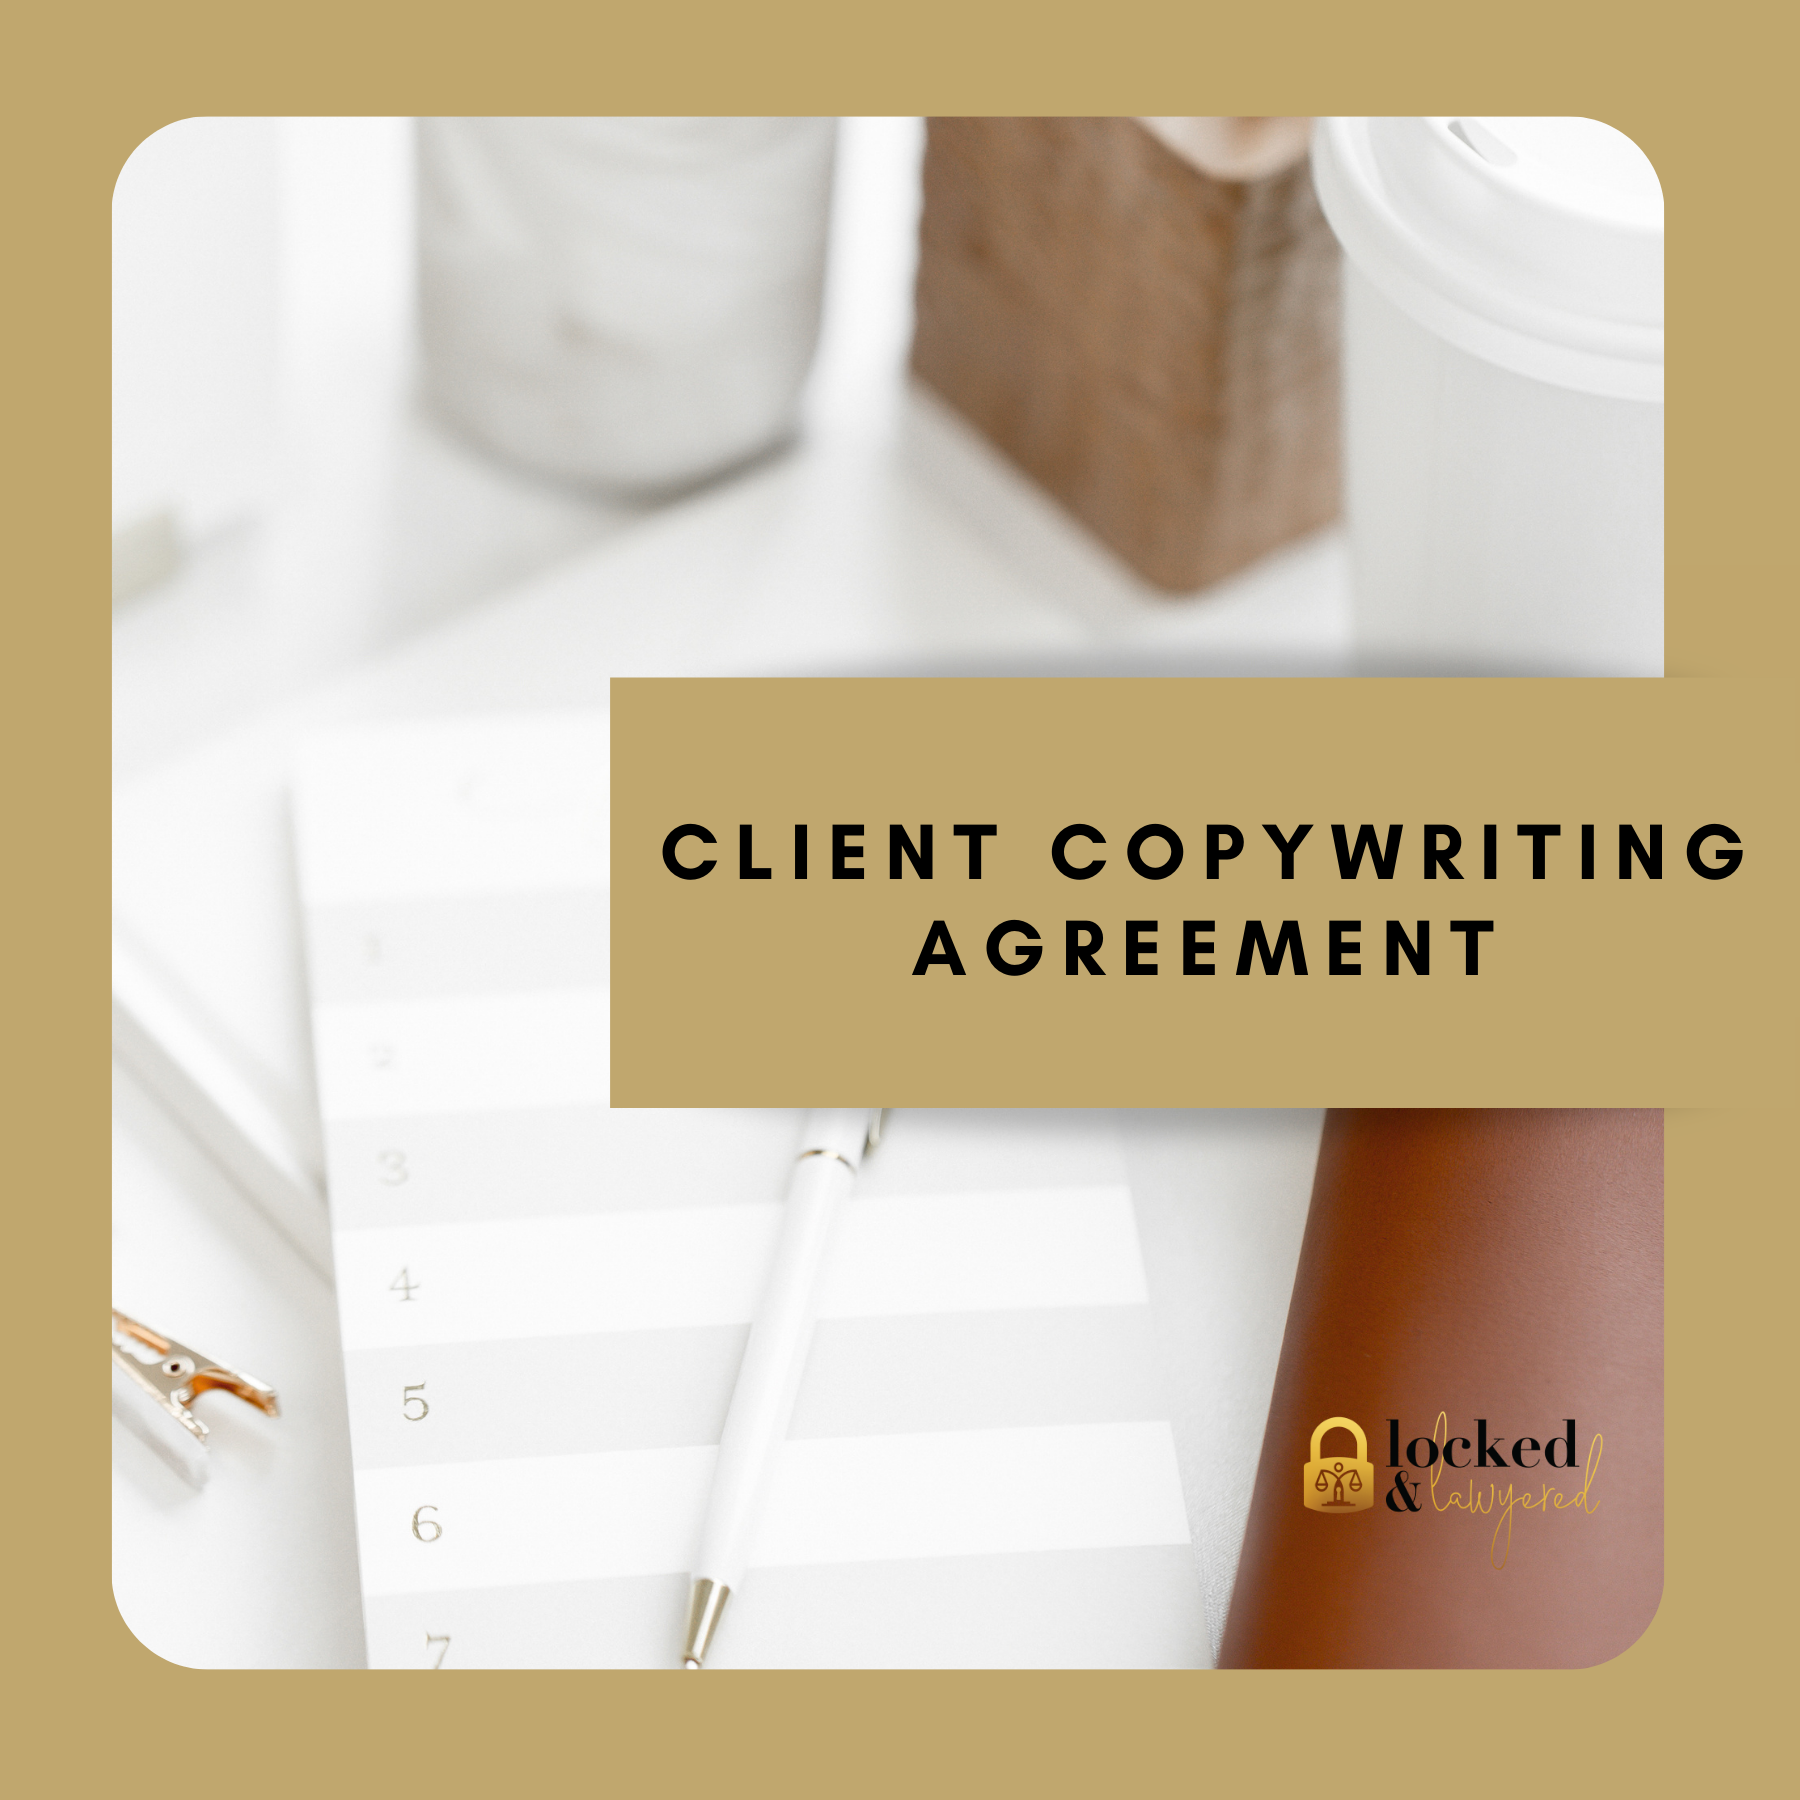 Client Copywriting Agreement